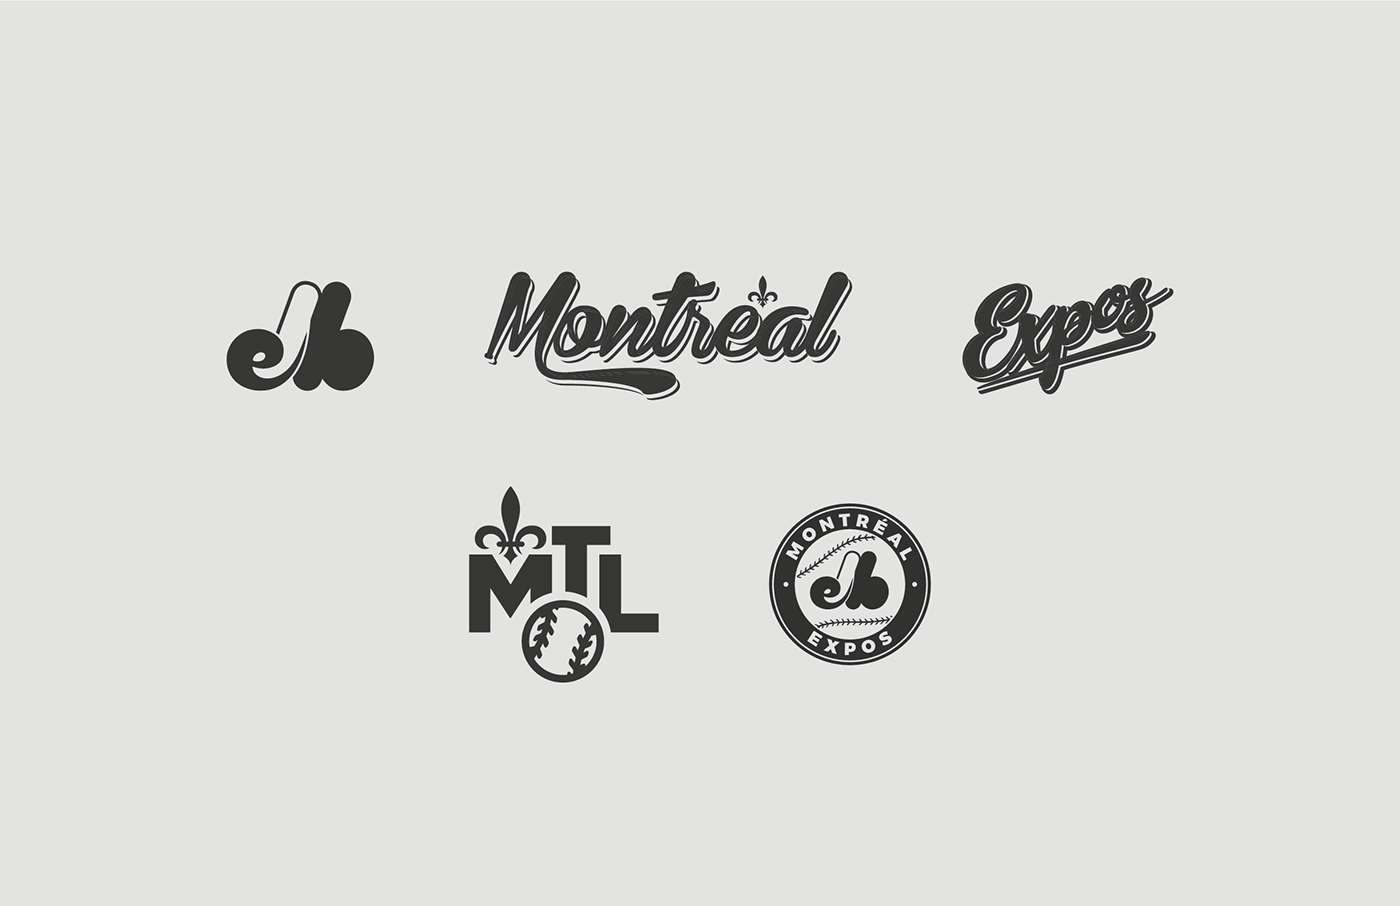 Montreal expos nos amours baseball mlb Return Rebrand identité visuelle logo sport jersey outfit uniform play ball